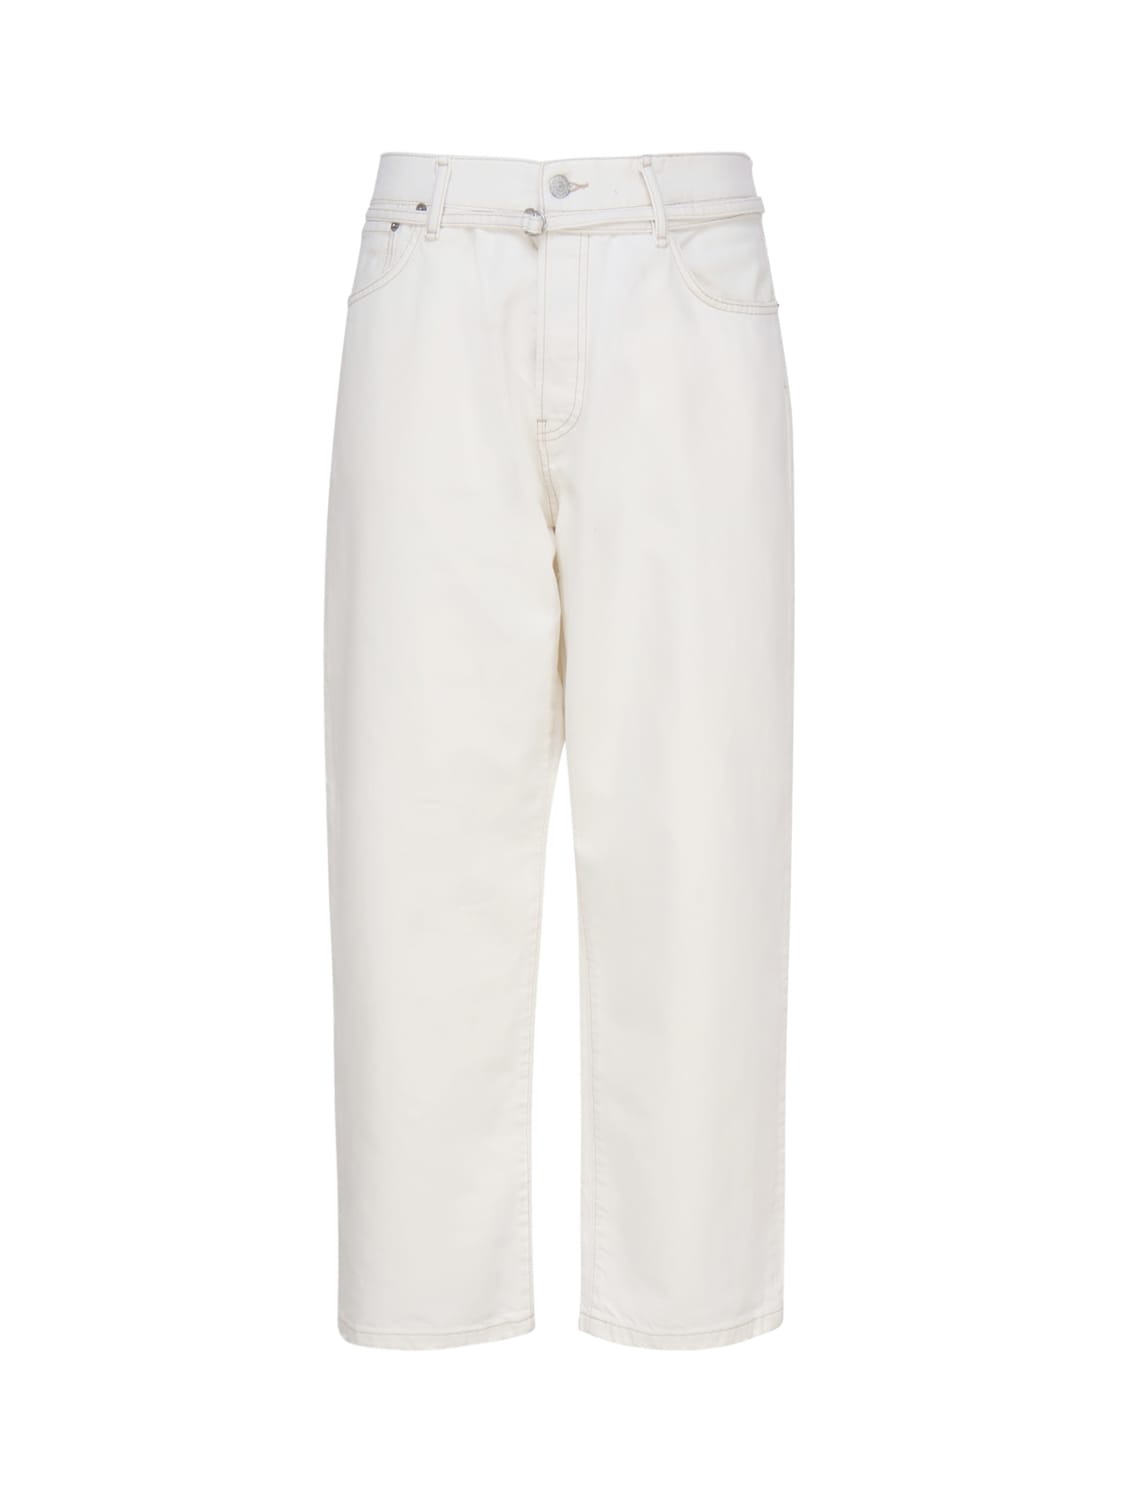 Acne Studios Jeans In Cotton In Off White